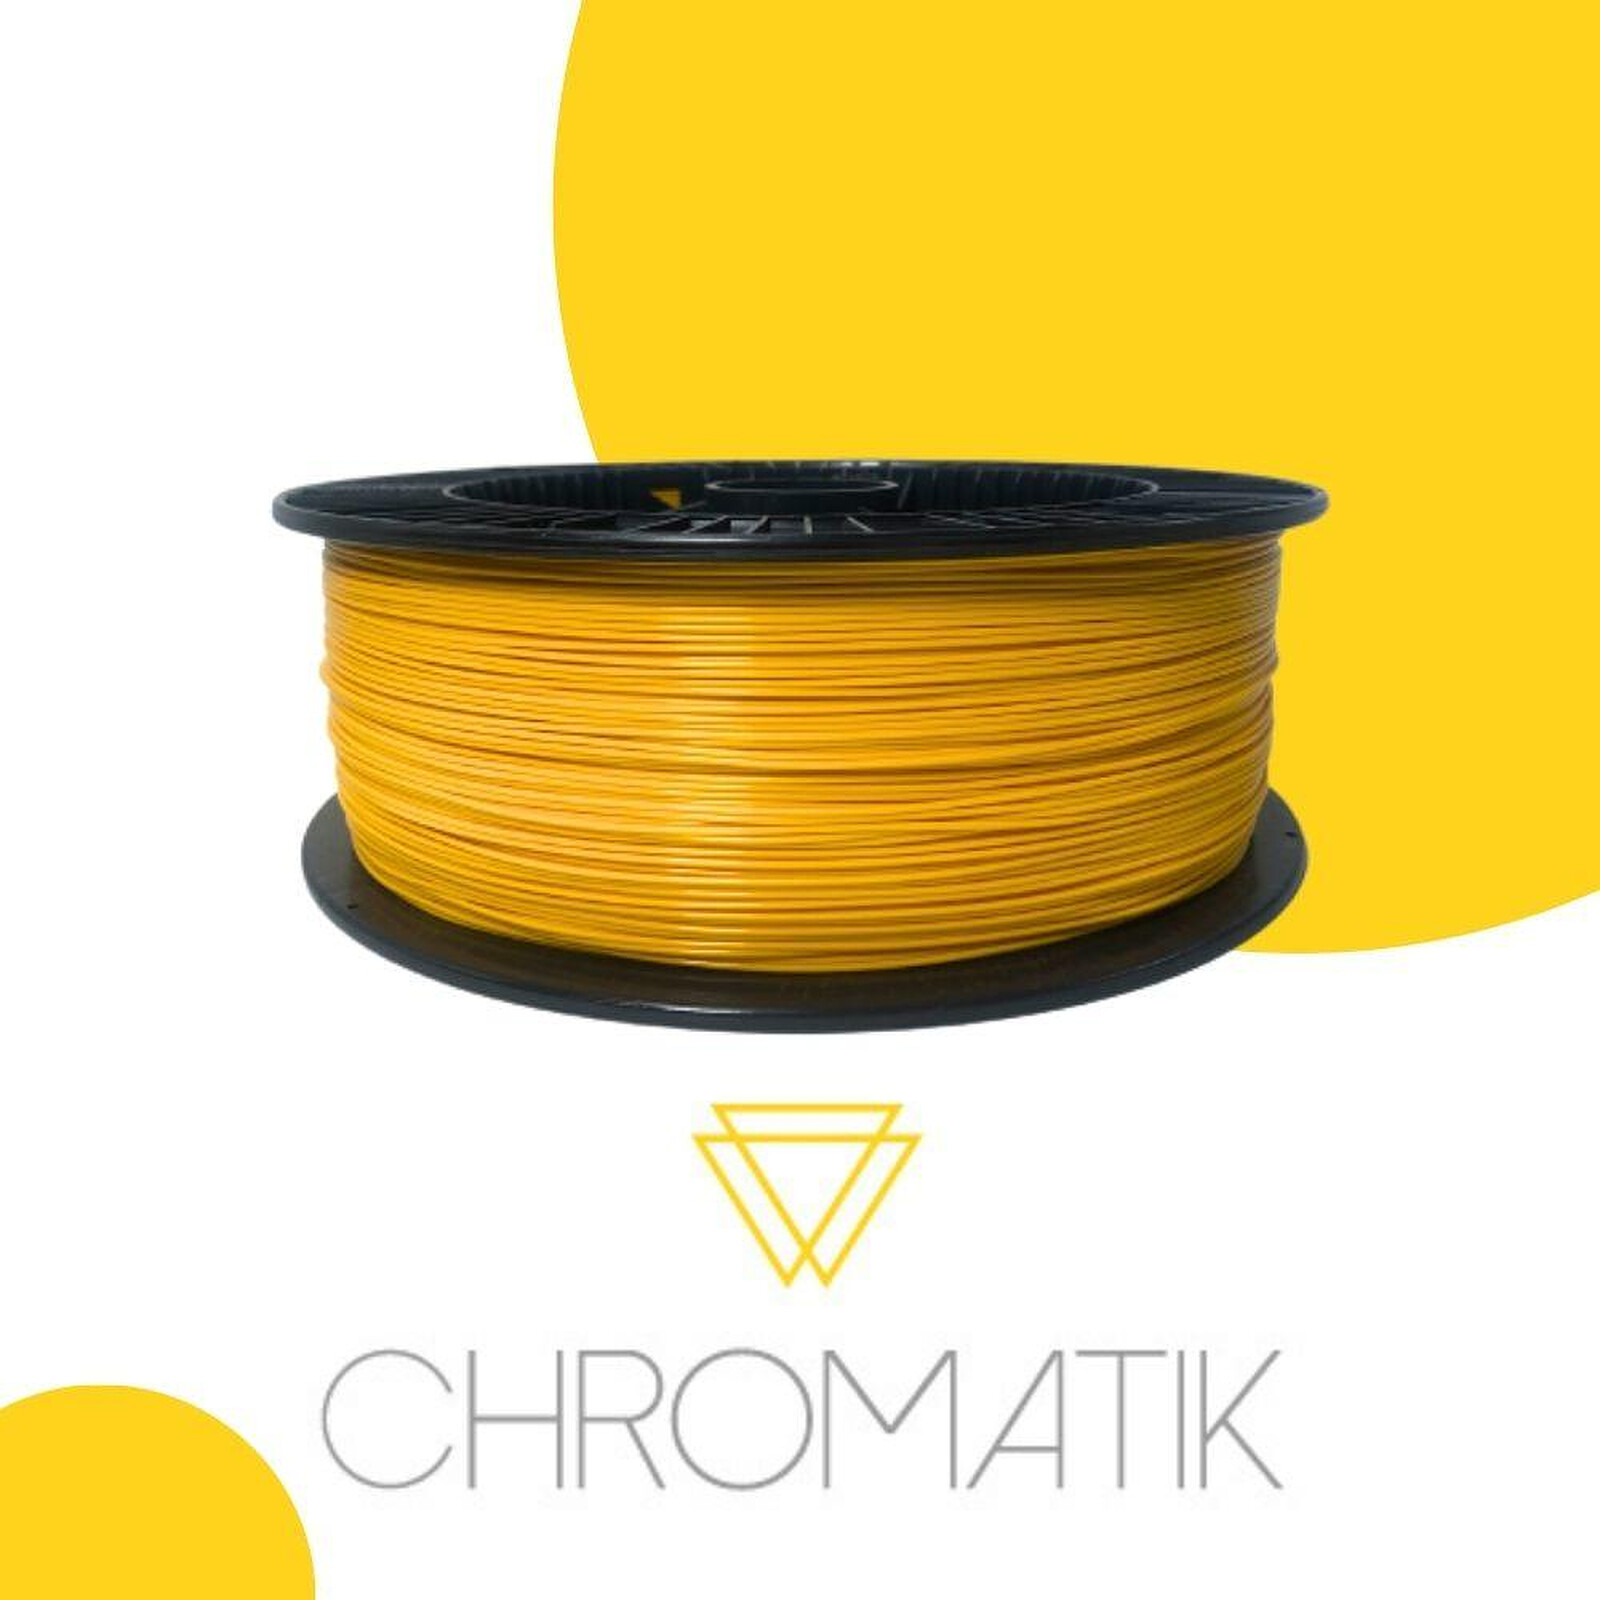 Chromatik - PLA Jaune Soleil 2200g - Filament 1.75mm - Filament 3D